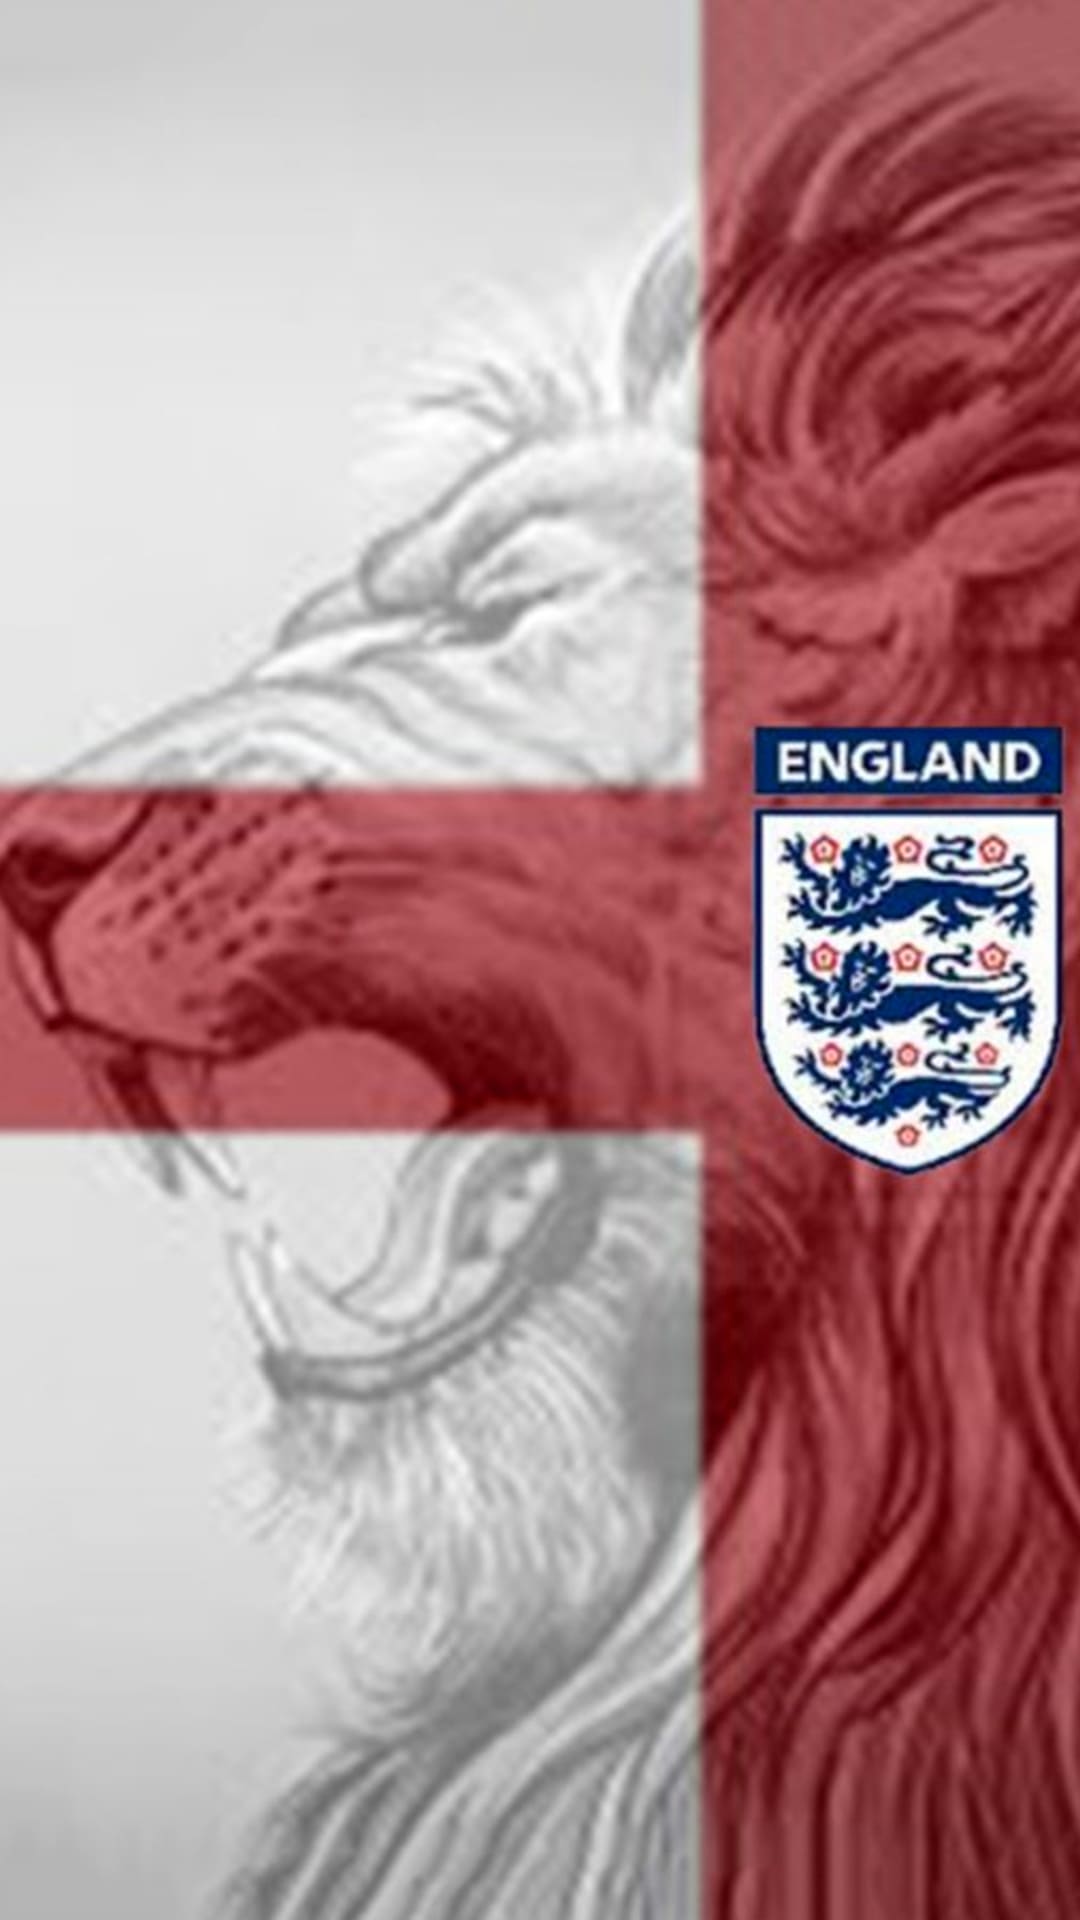 England Football Team Wallpapers